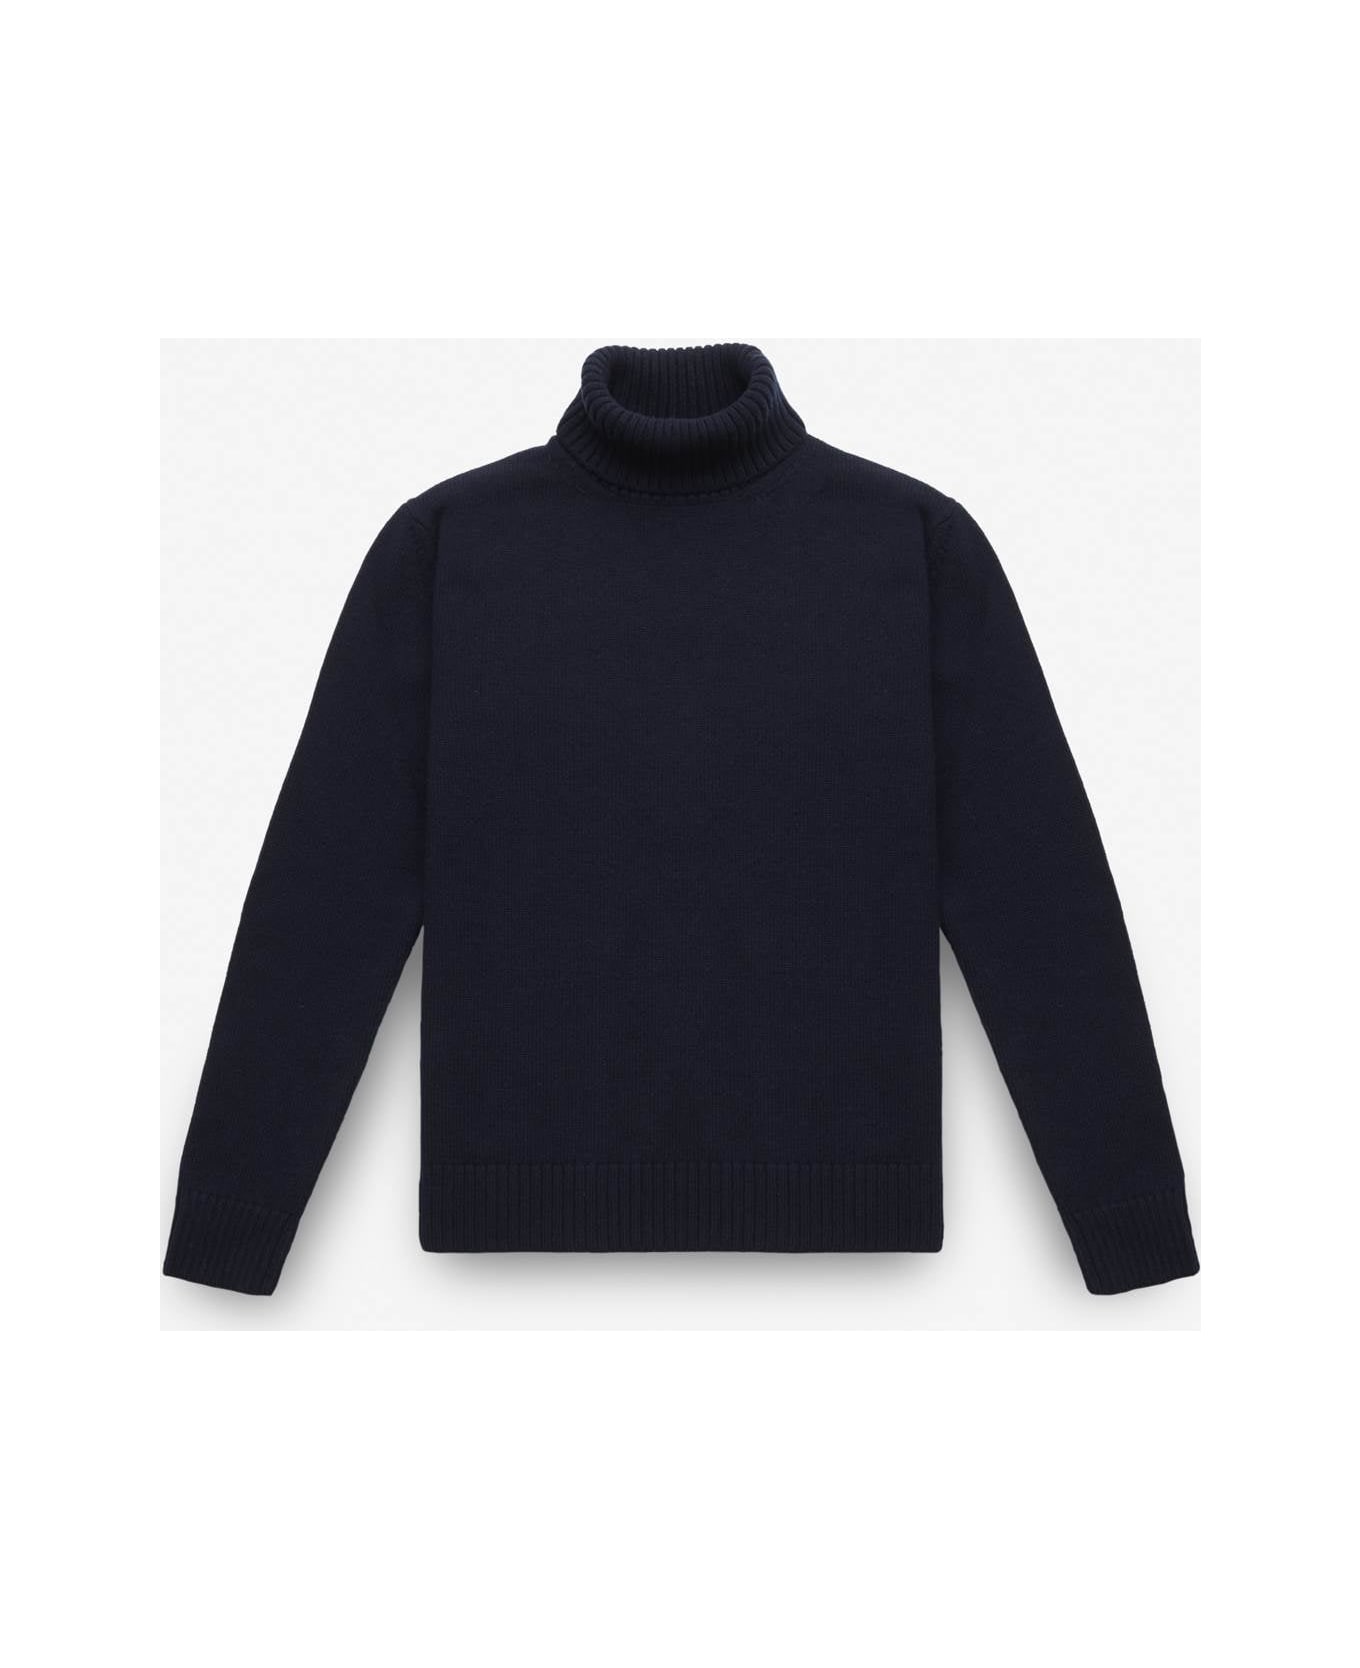 Larusmiani Turtleneck Sweater 'diablerets' Sweater - MidnightBlue